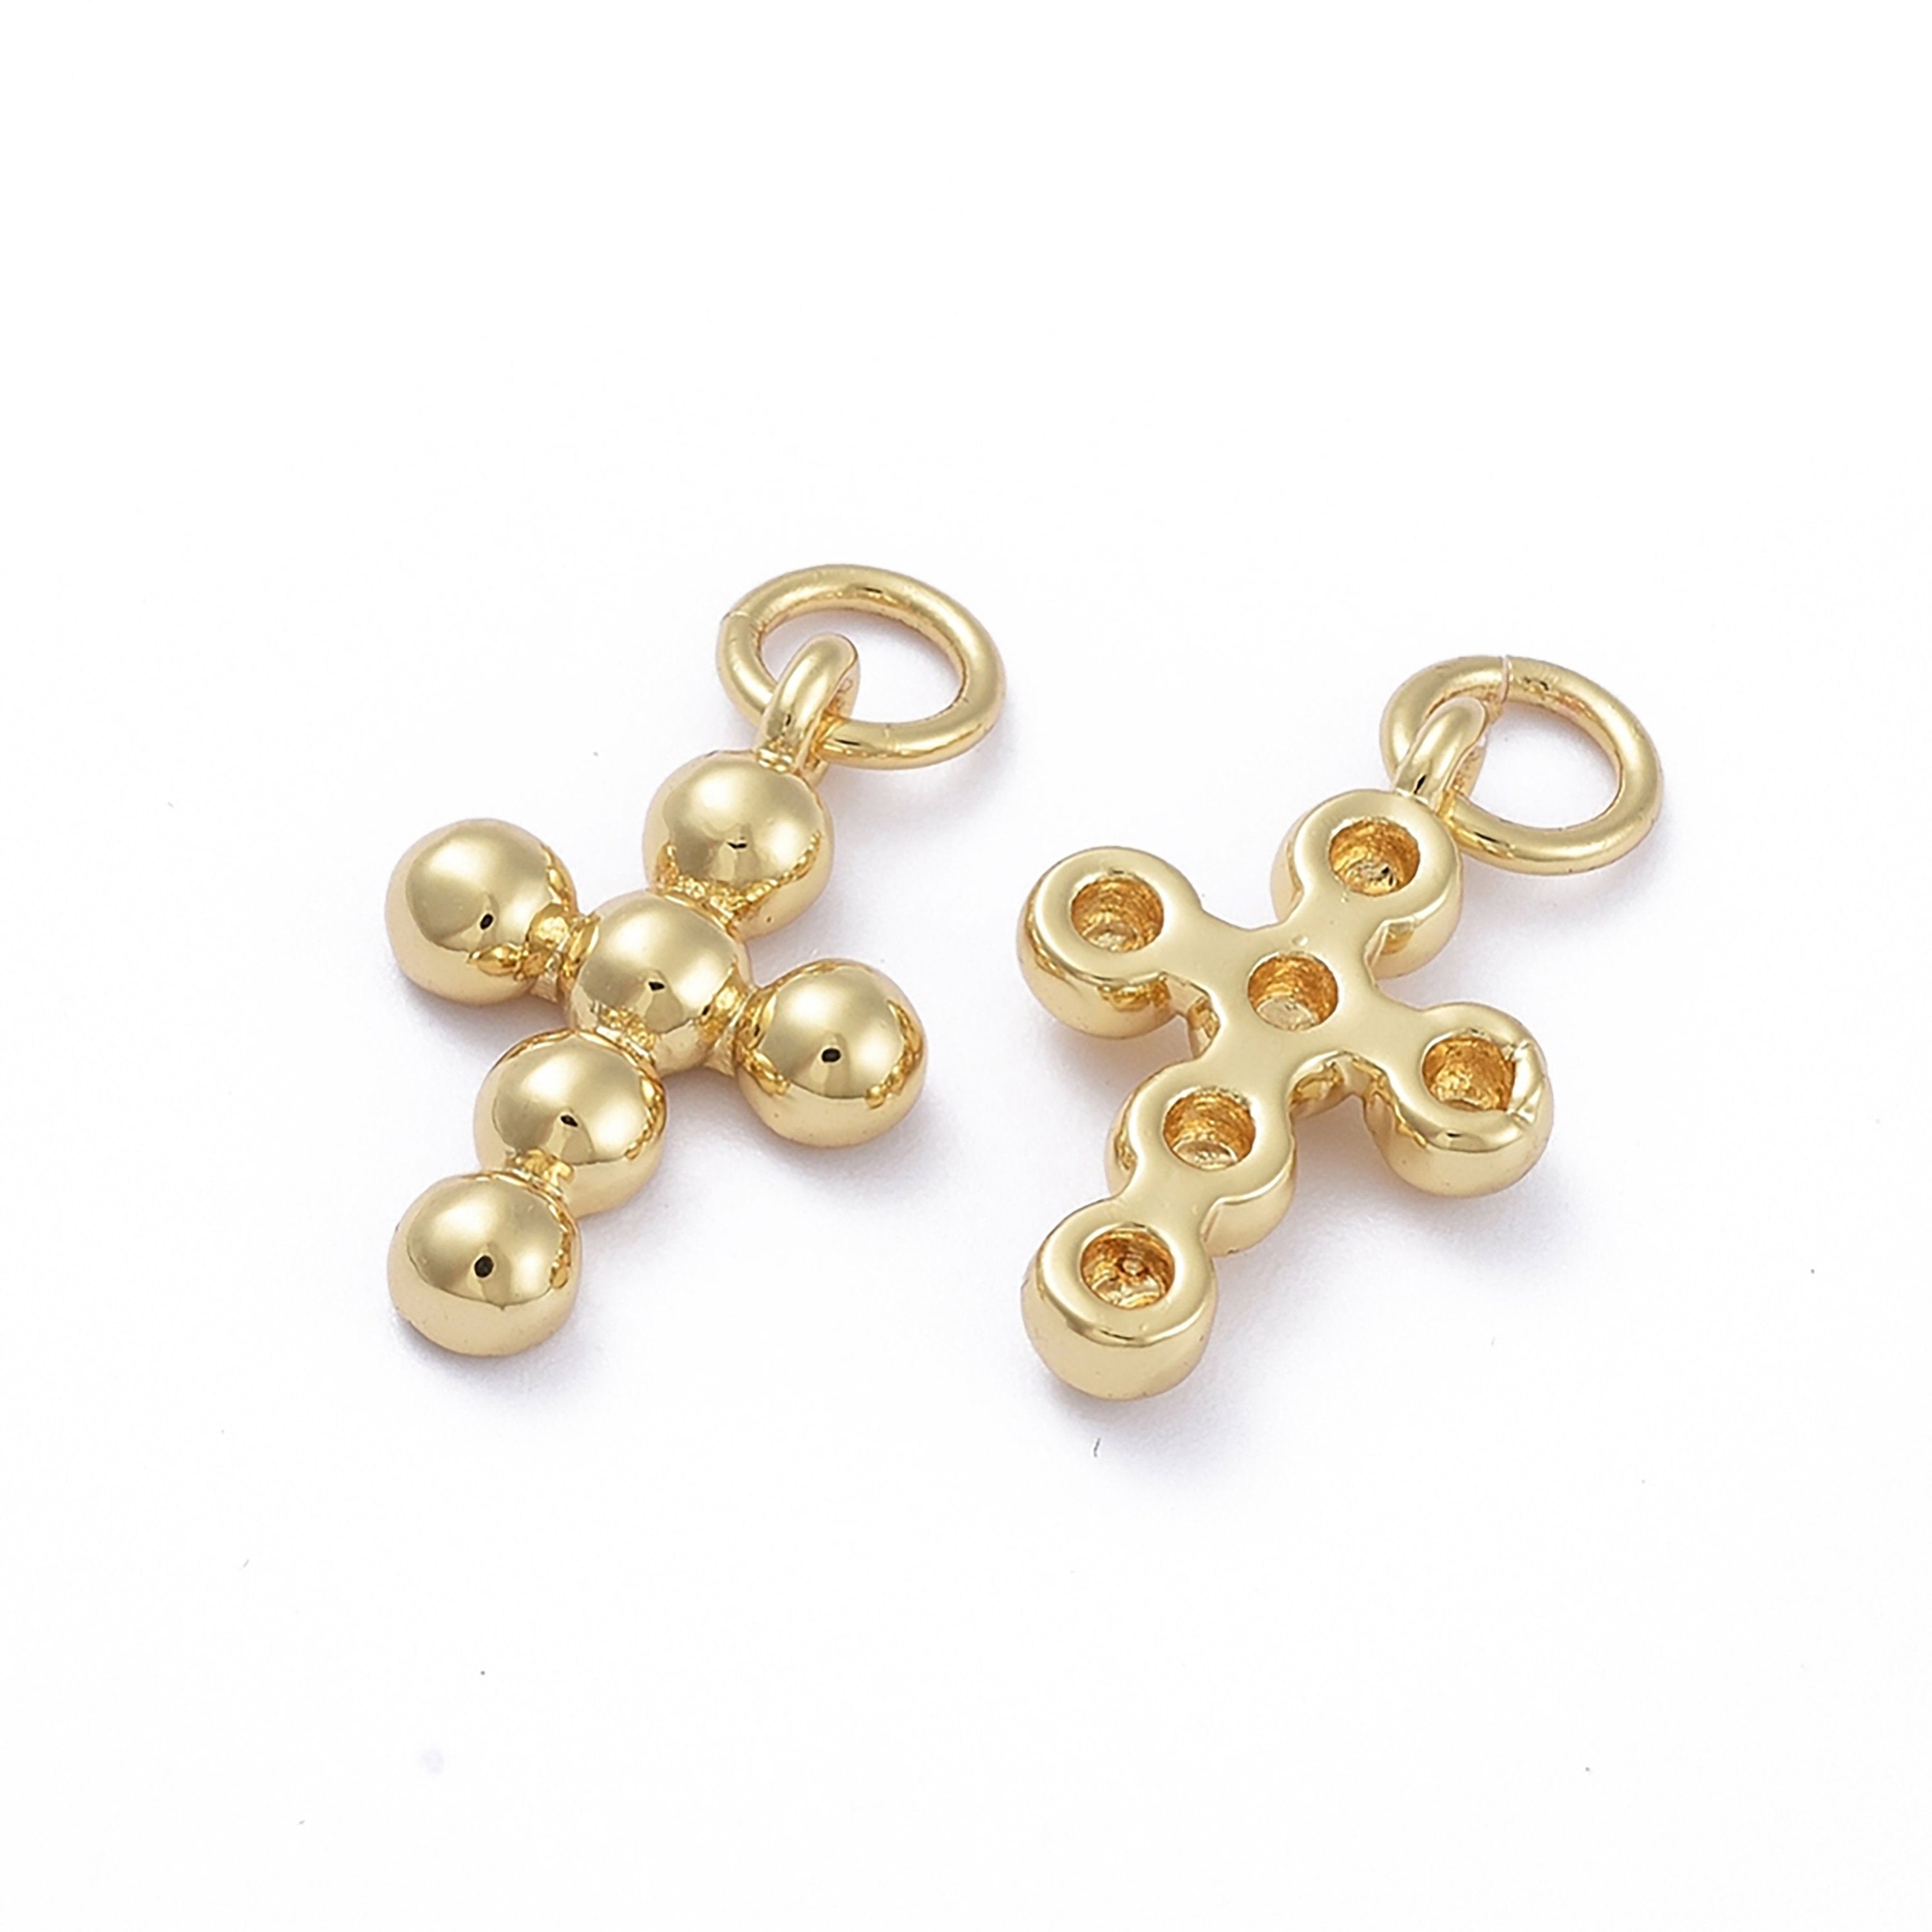 1pc, 16x10x2.5mm, Brass Cross Charms in Golden